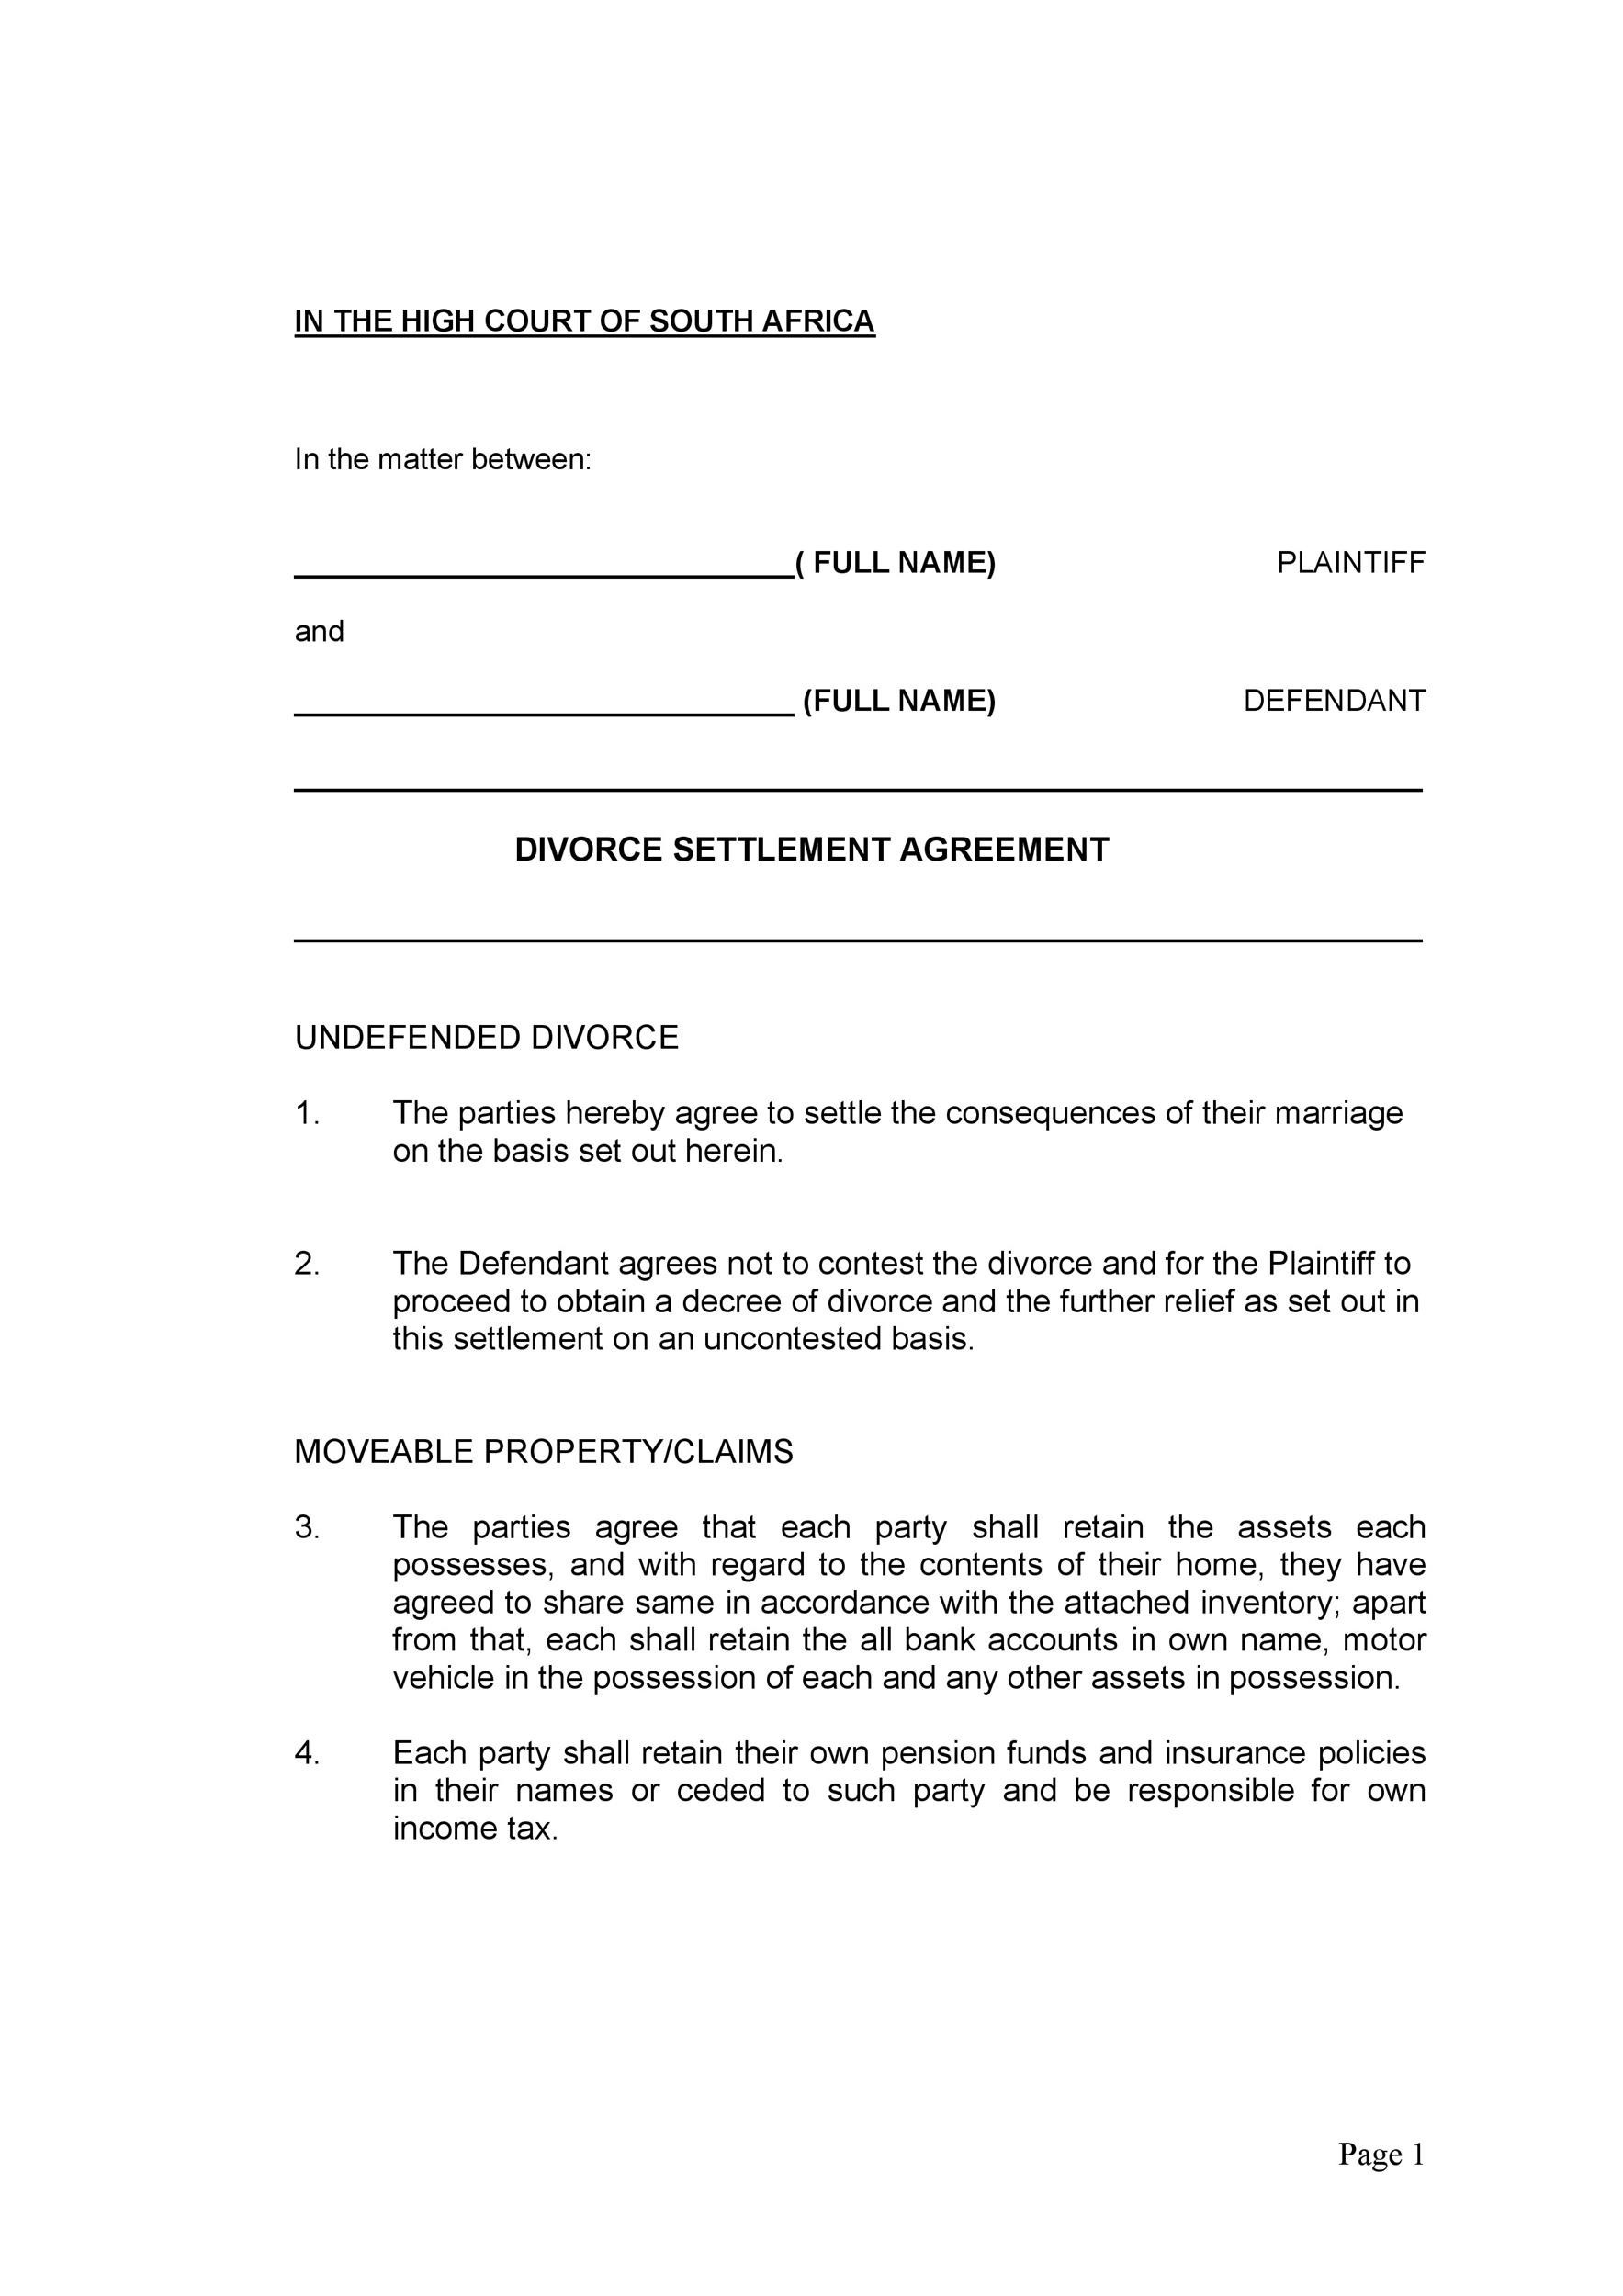 Free divorce agreement 05